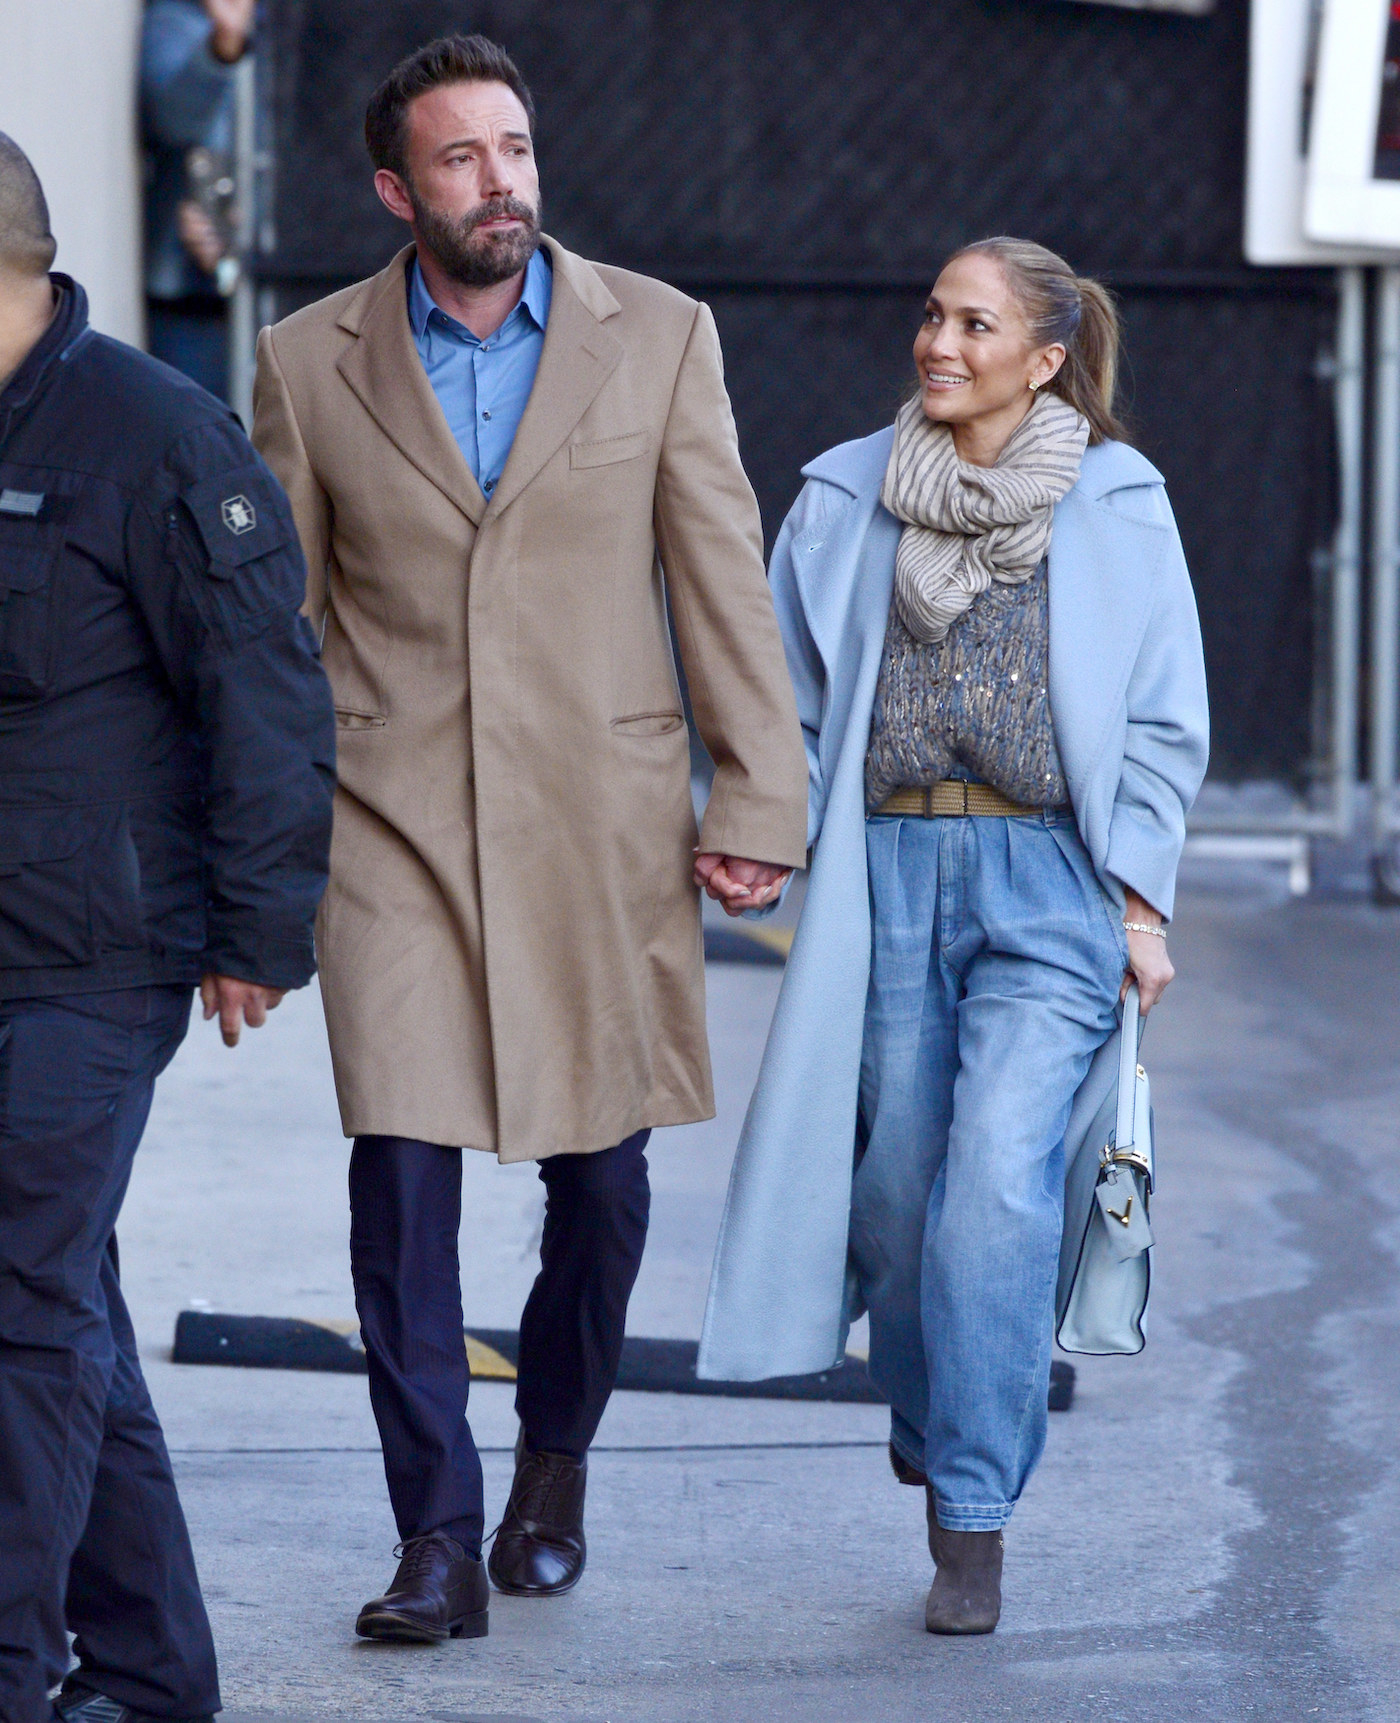 Ben walks with Jennifer